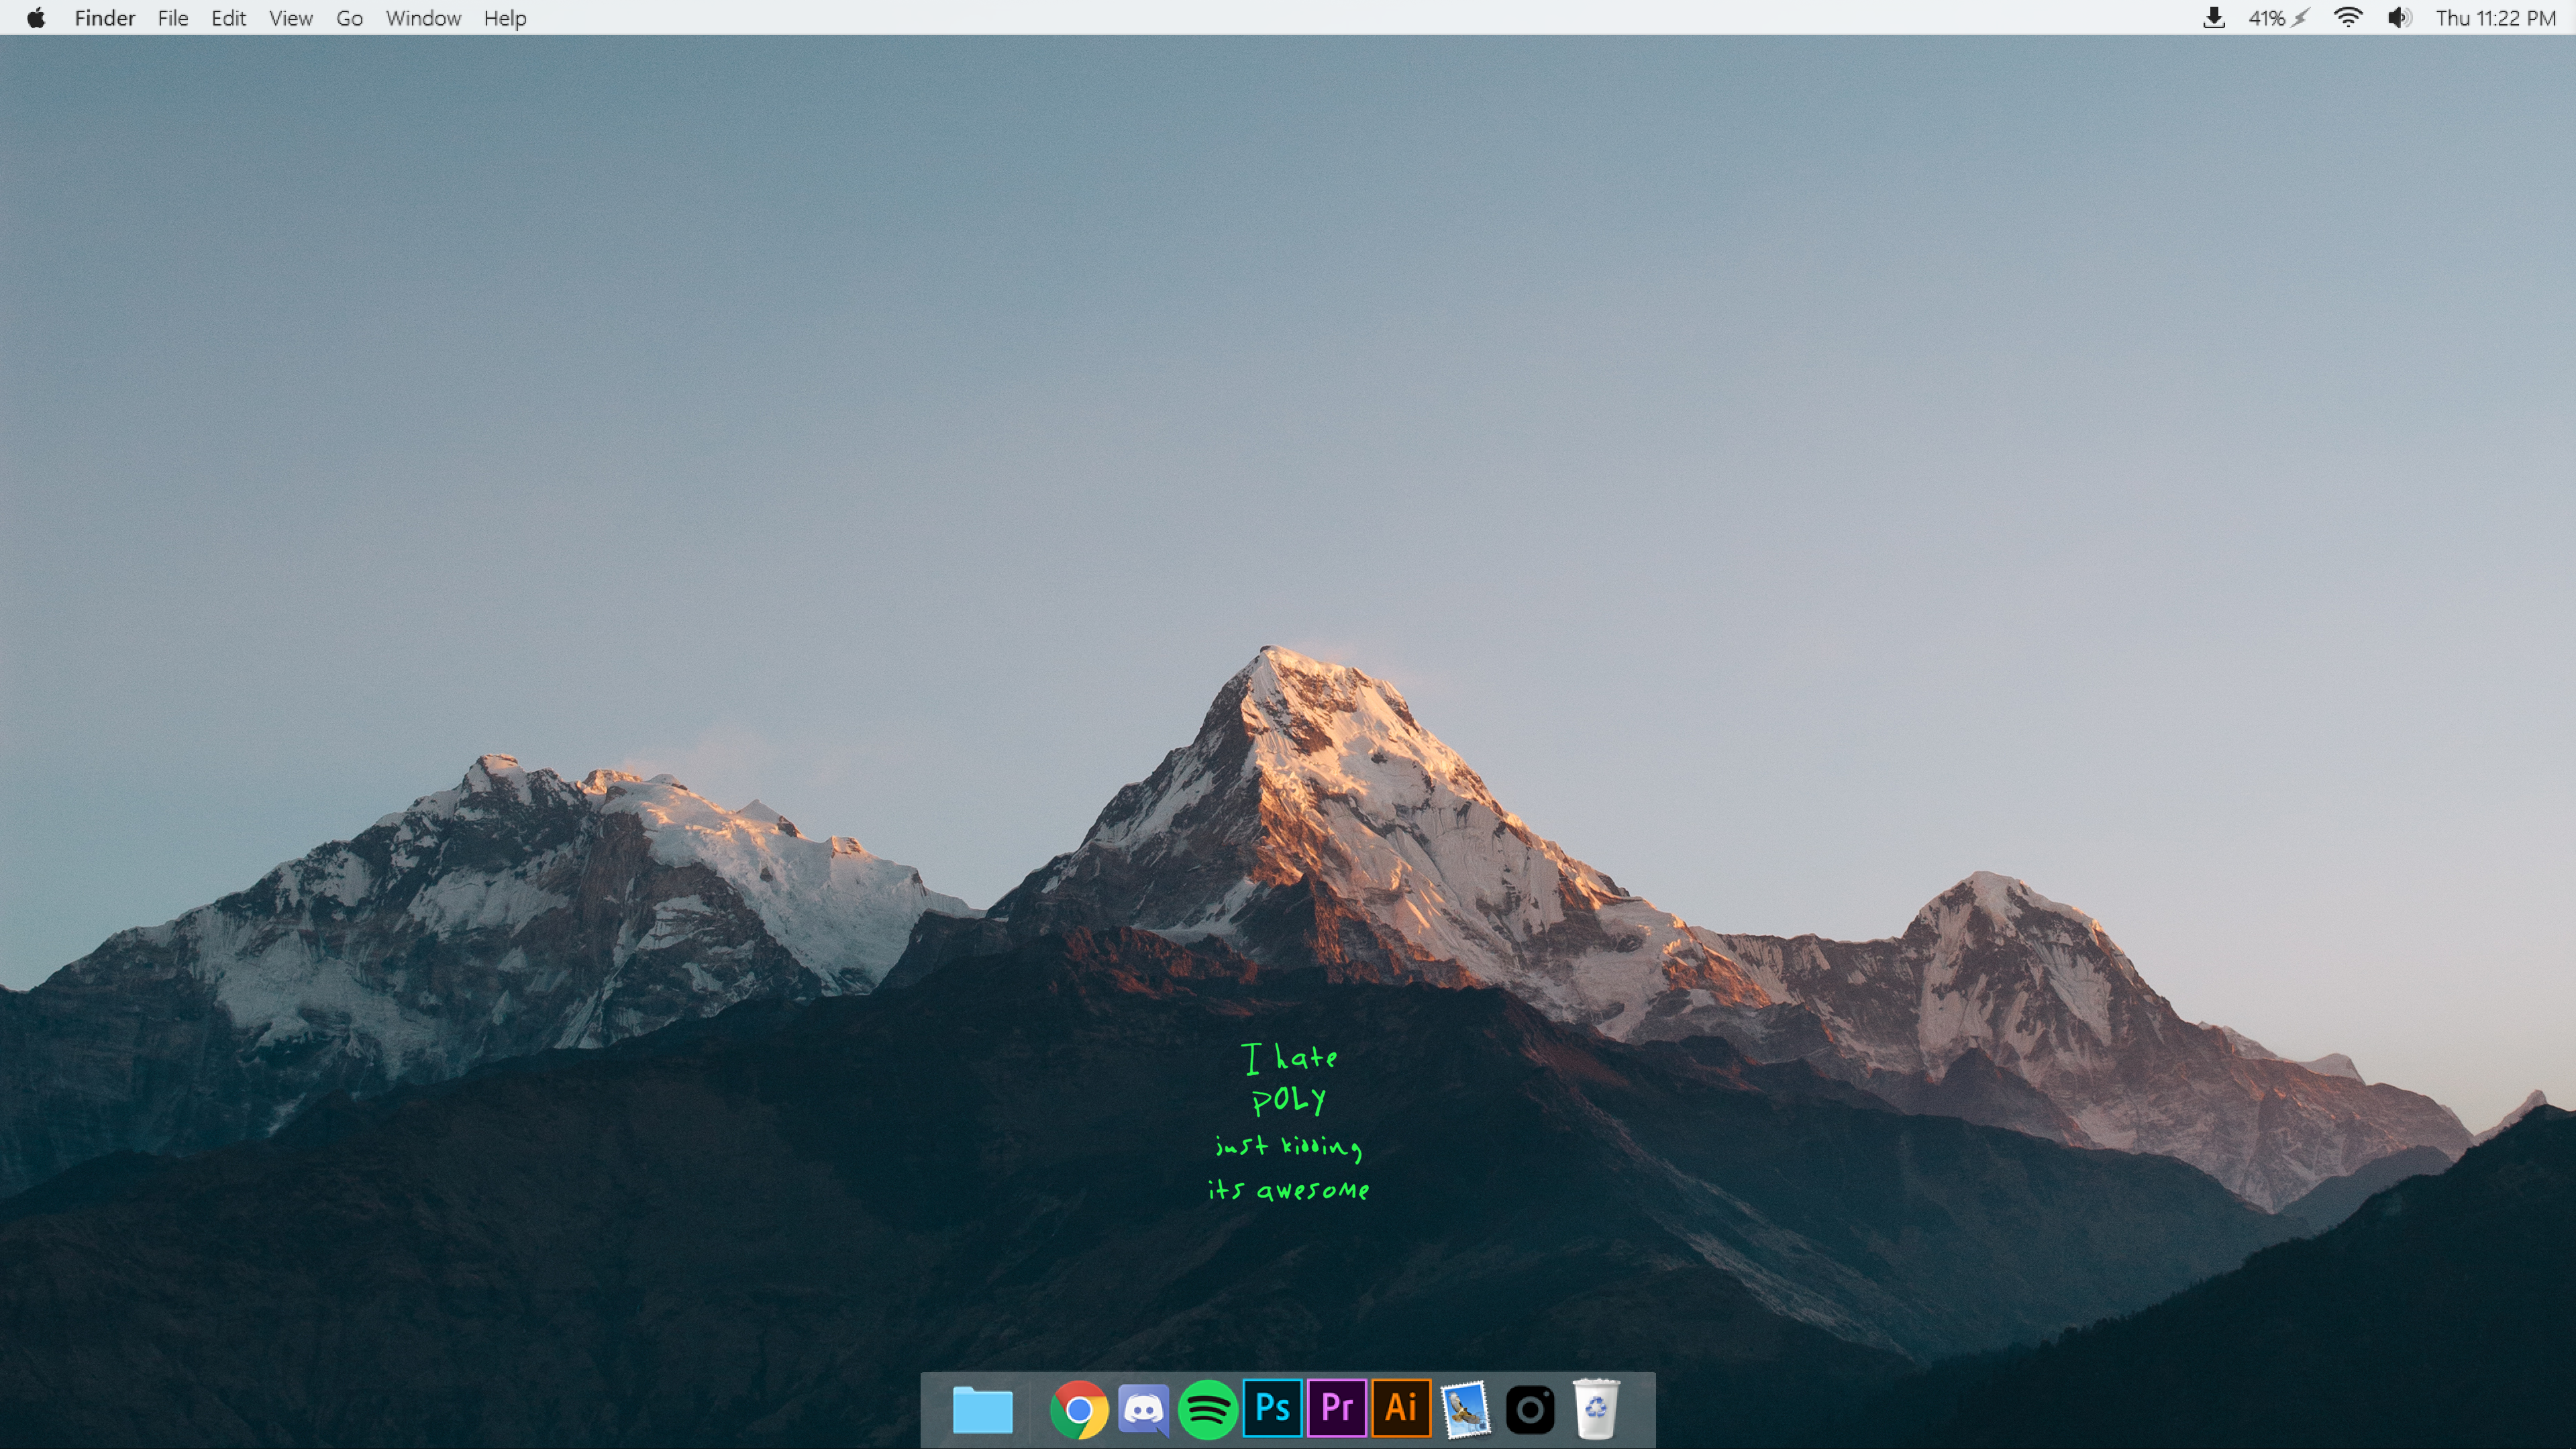 mac osx style dock for windows 10